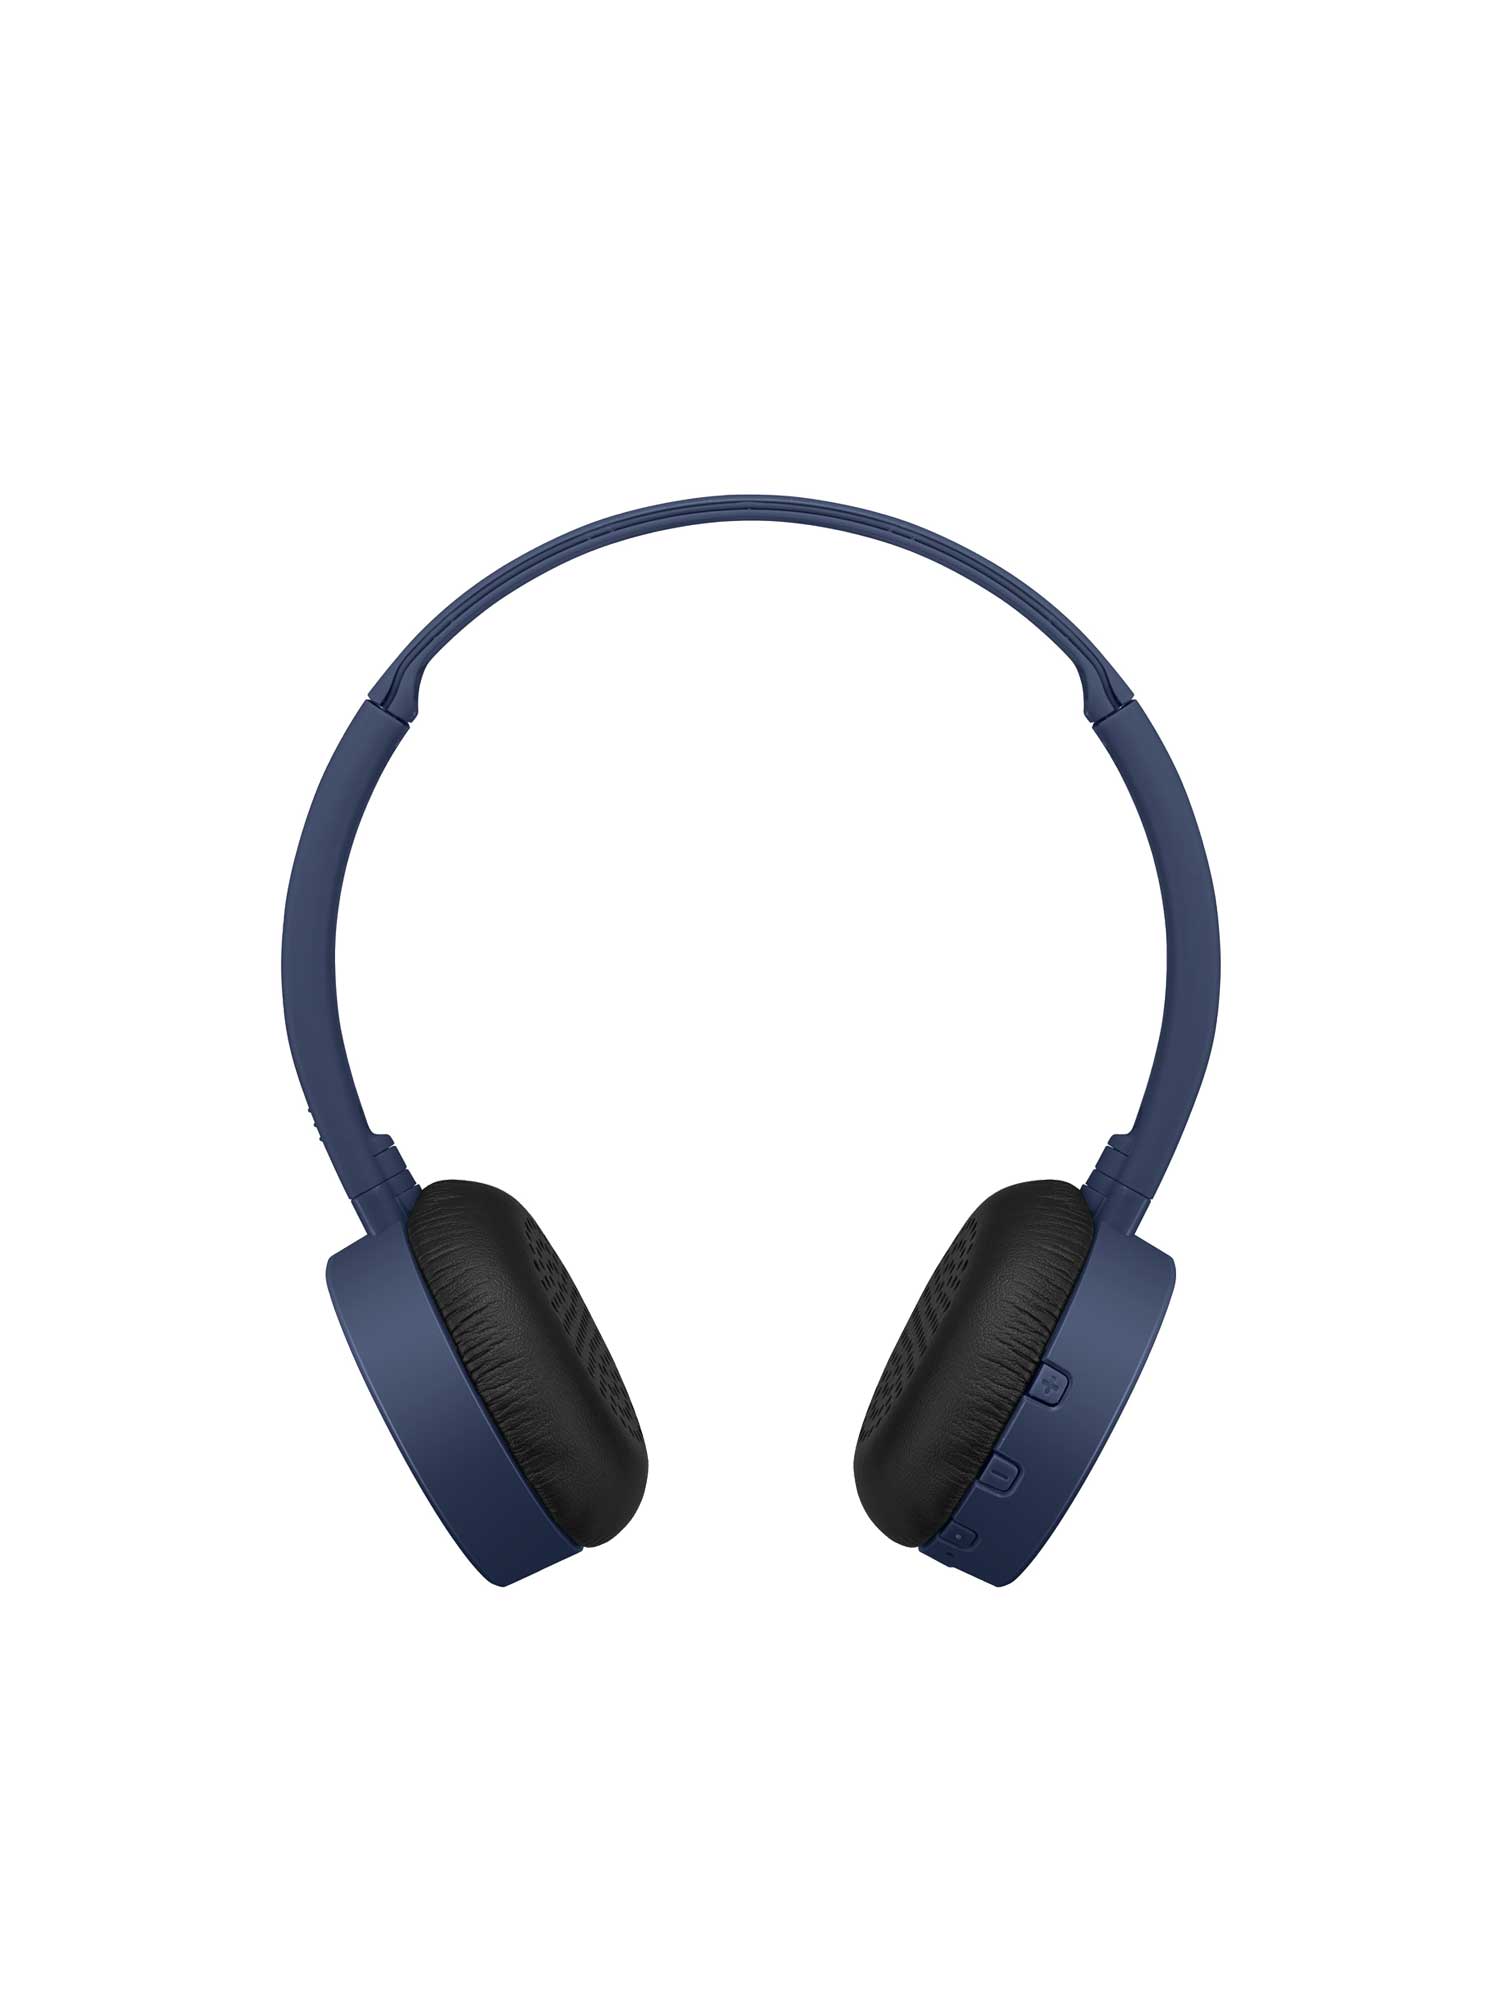 HA-S24W-A in blue on-ear wireless bluetooth headphones comfortable fit